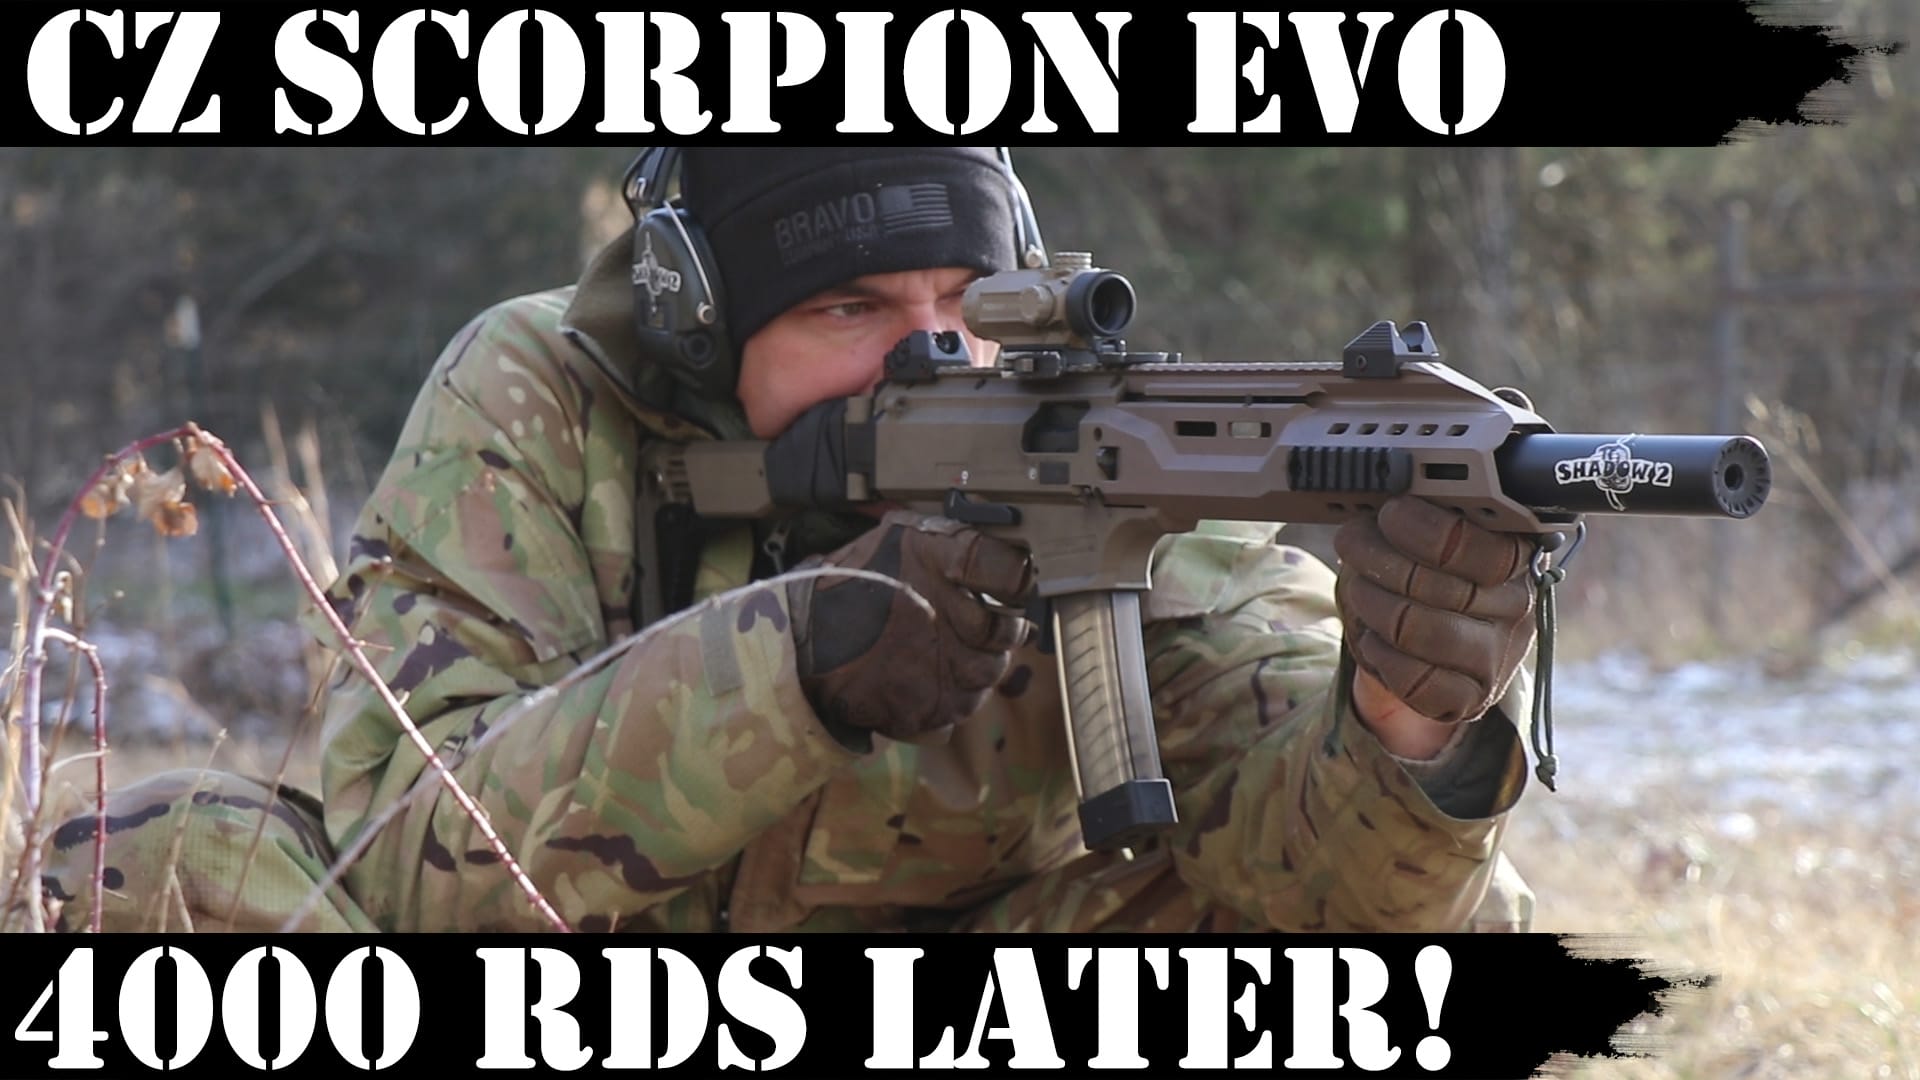 CZ Scorpion Evo3 S1: 4,000 Rds Later – WOW!